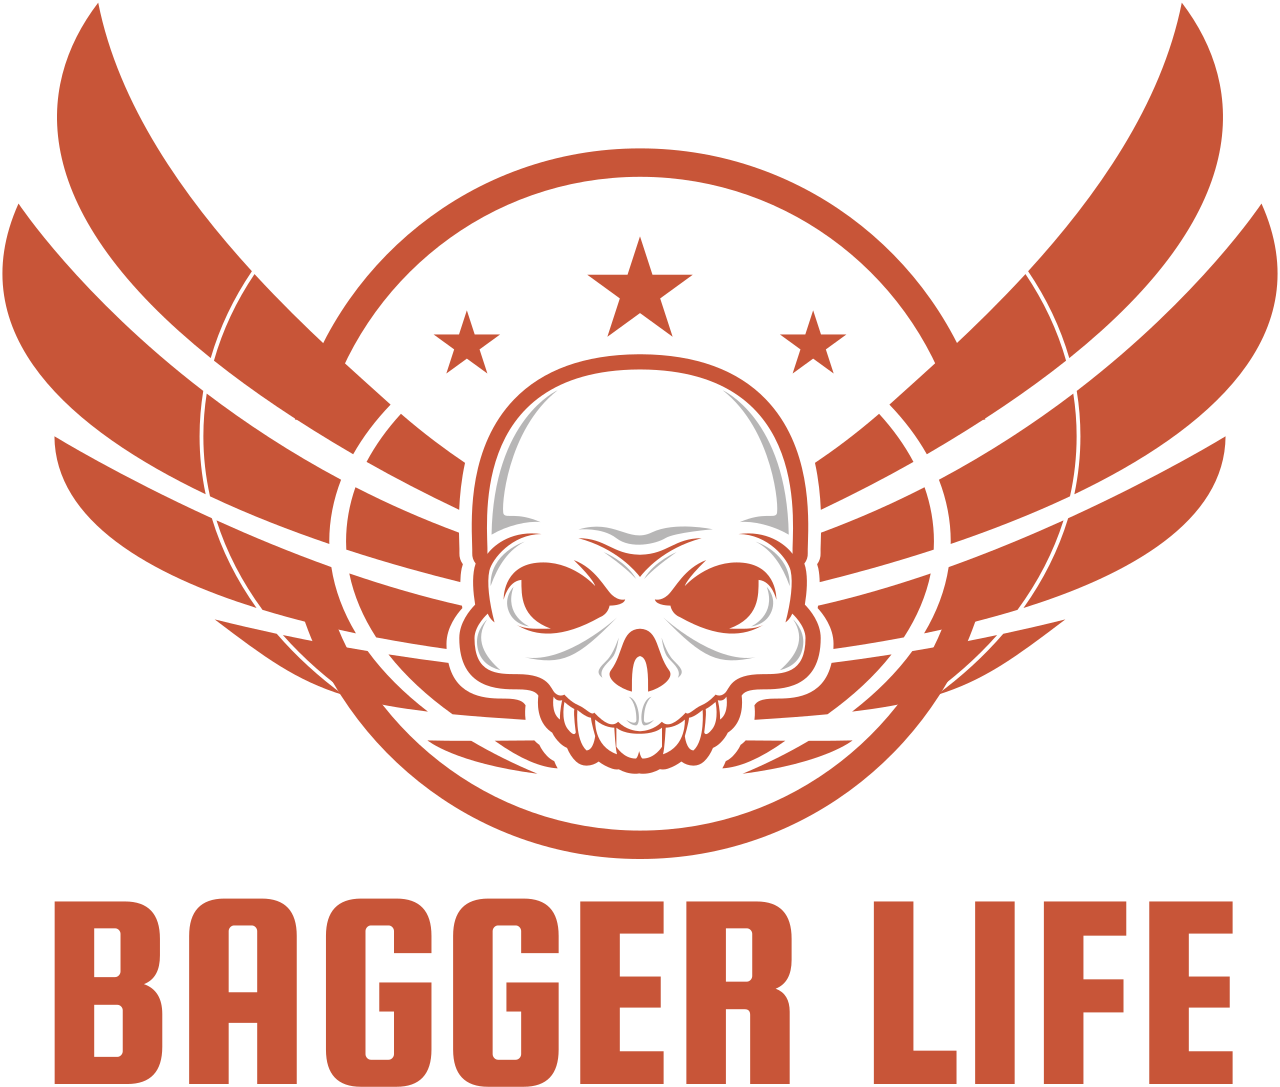 Bagger Life's web page